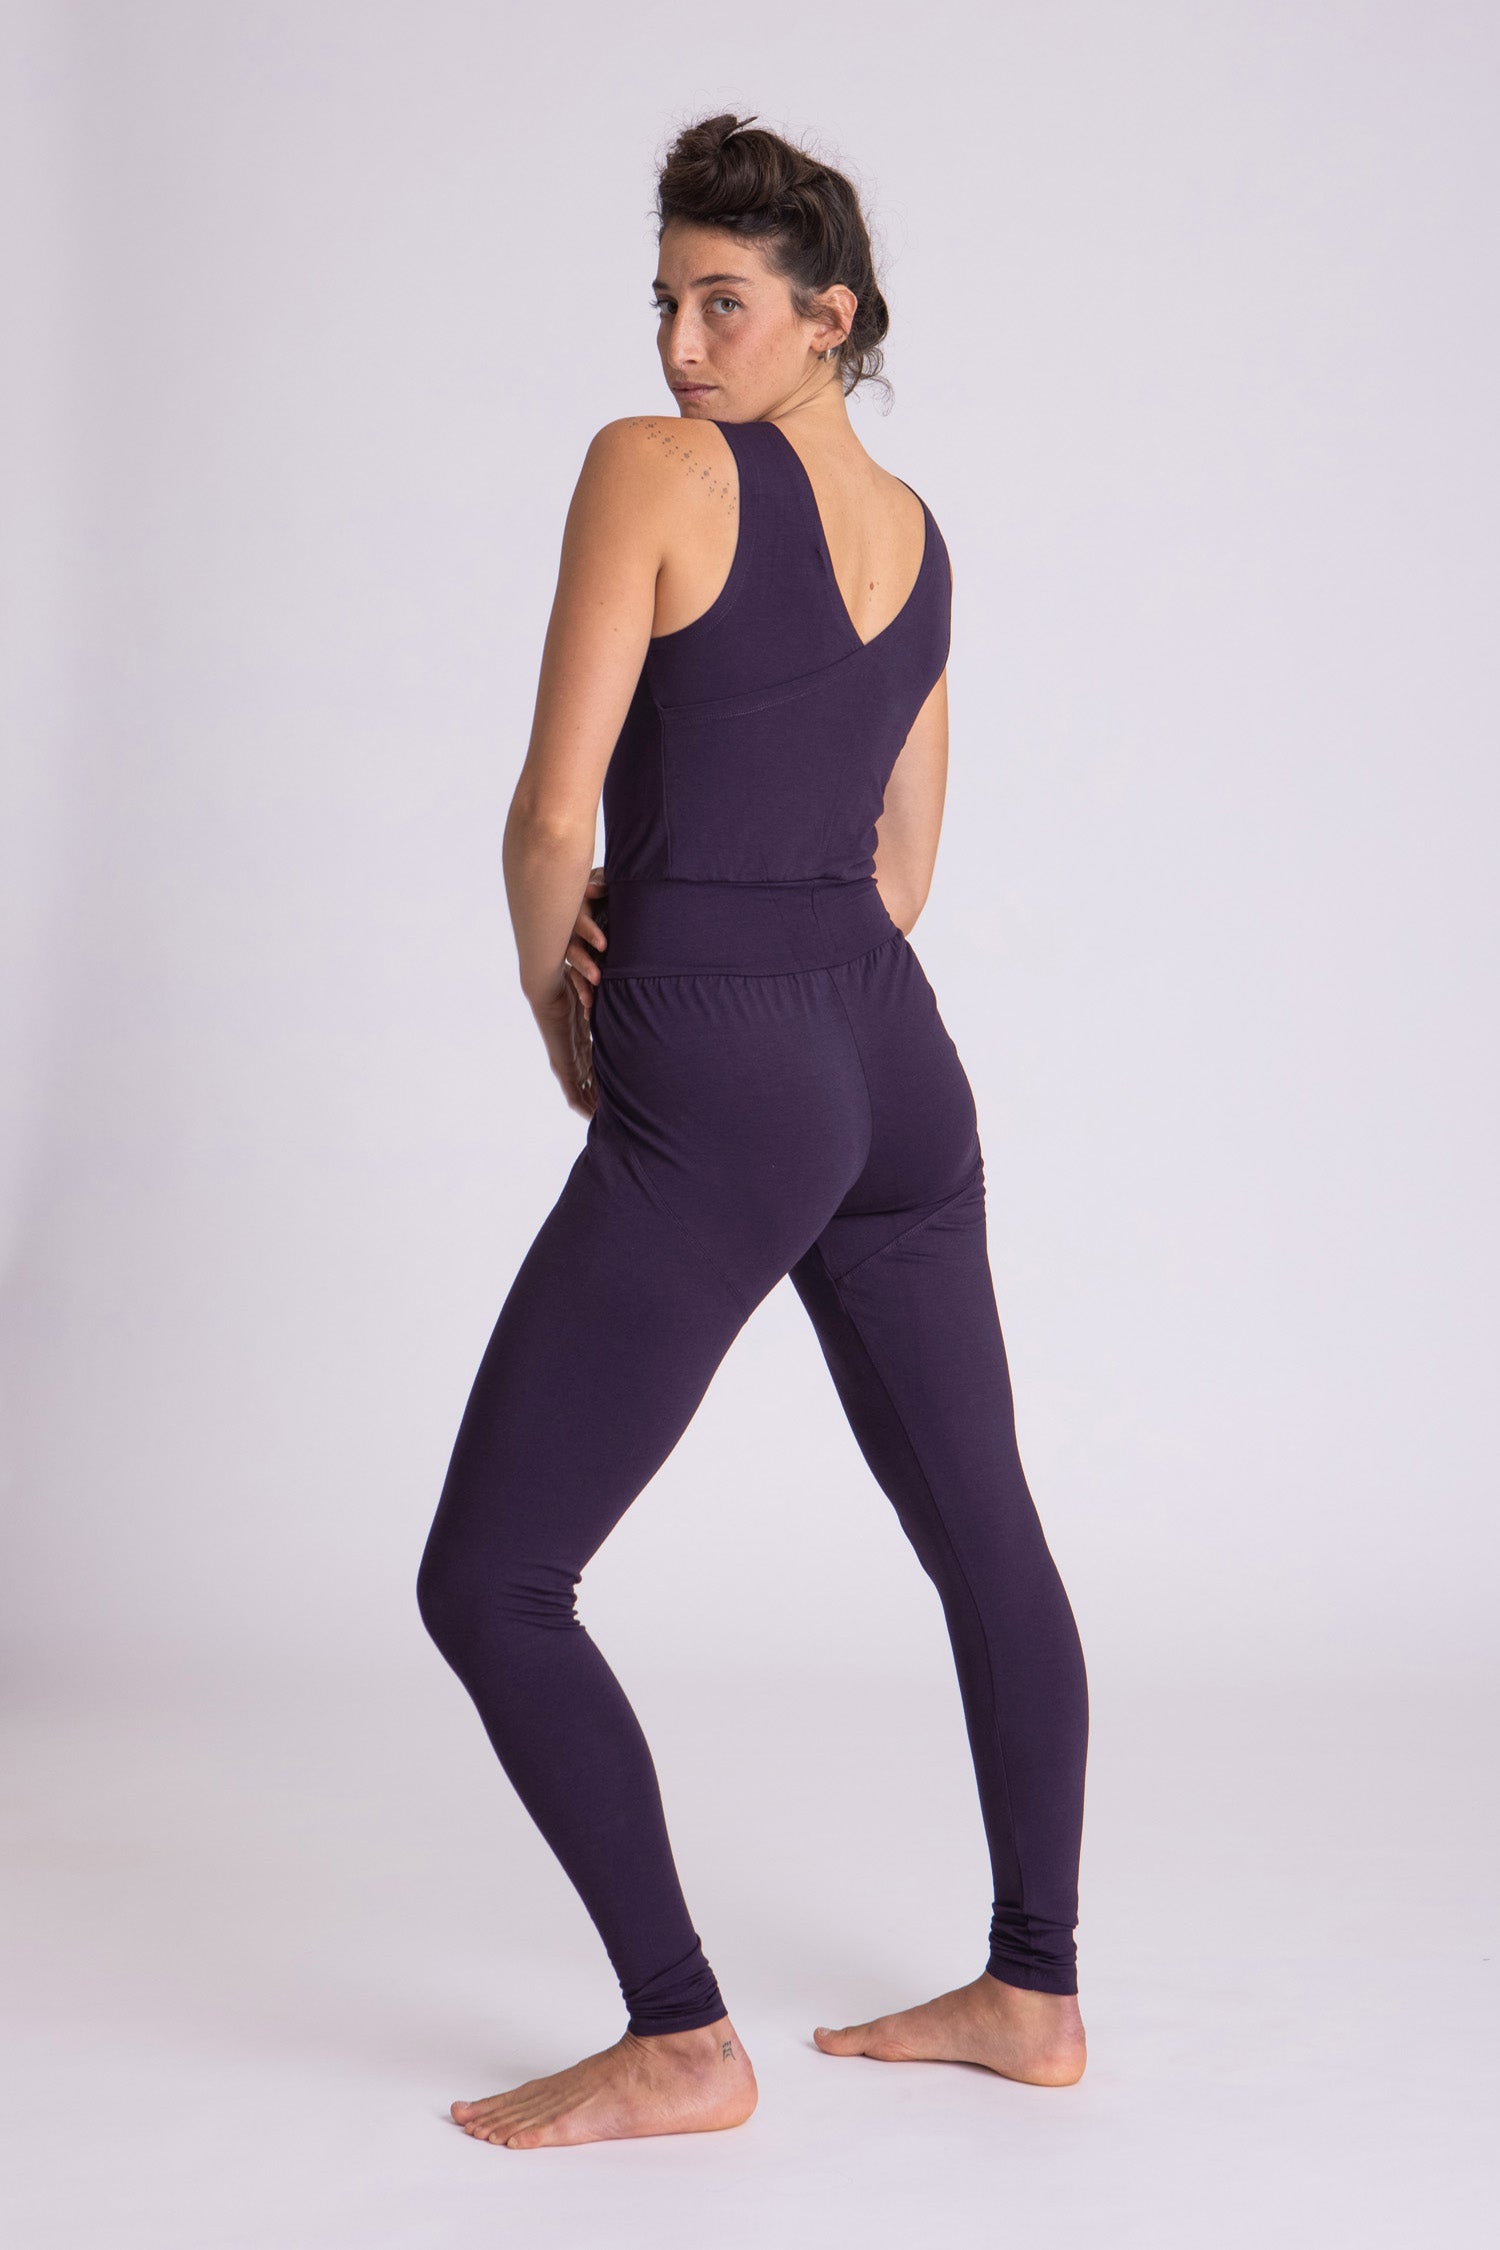 adviicd Yoga Pants For Girls Yoga Jumpsuits For Women Women's